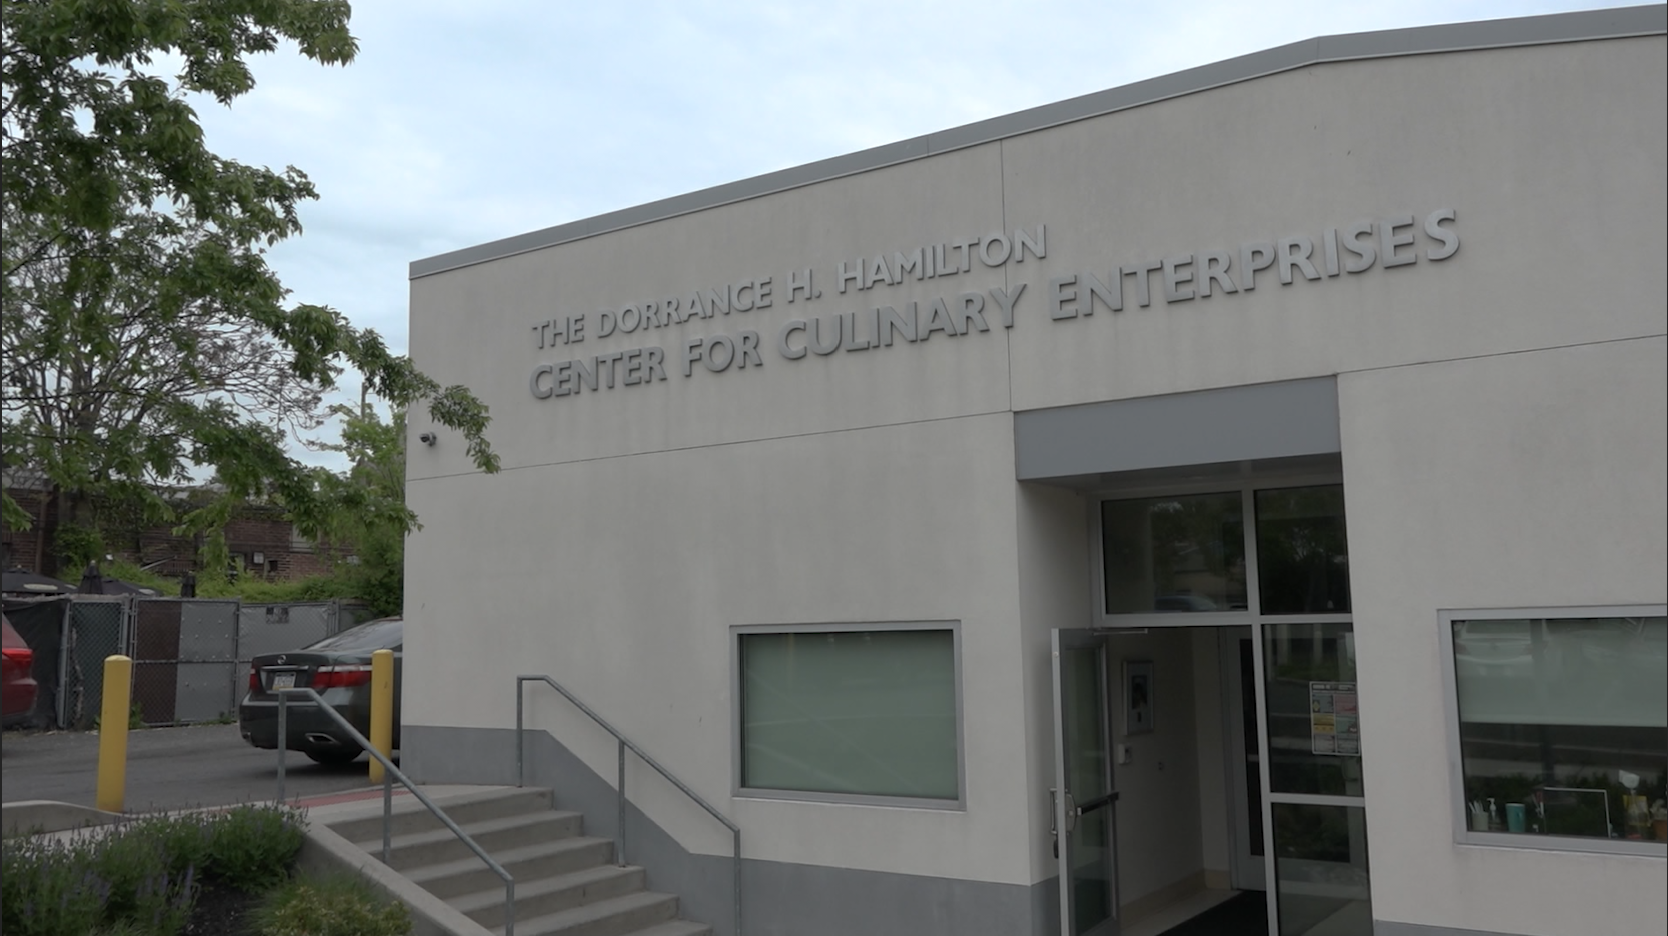 The Dorrance H. Hamilton Center for Culinary Enterprises